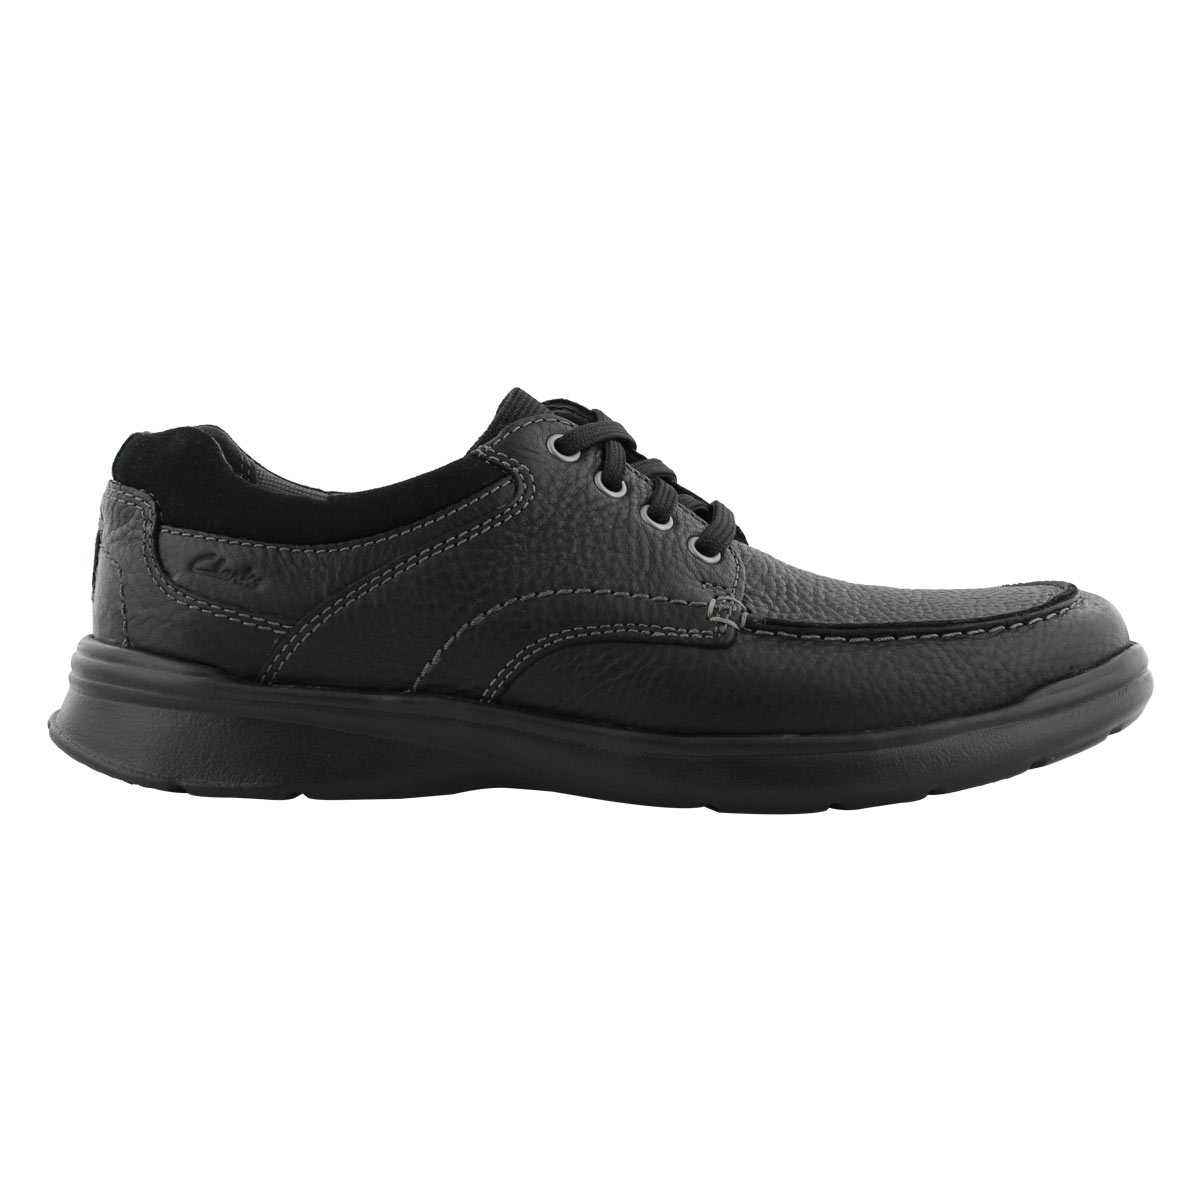 Clarks Men's COTRELL EDGE black lace up shoes | SoftMoc.com